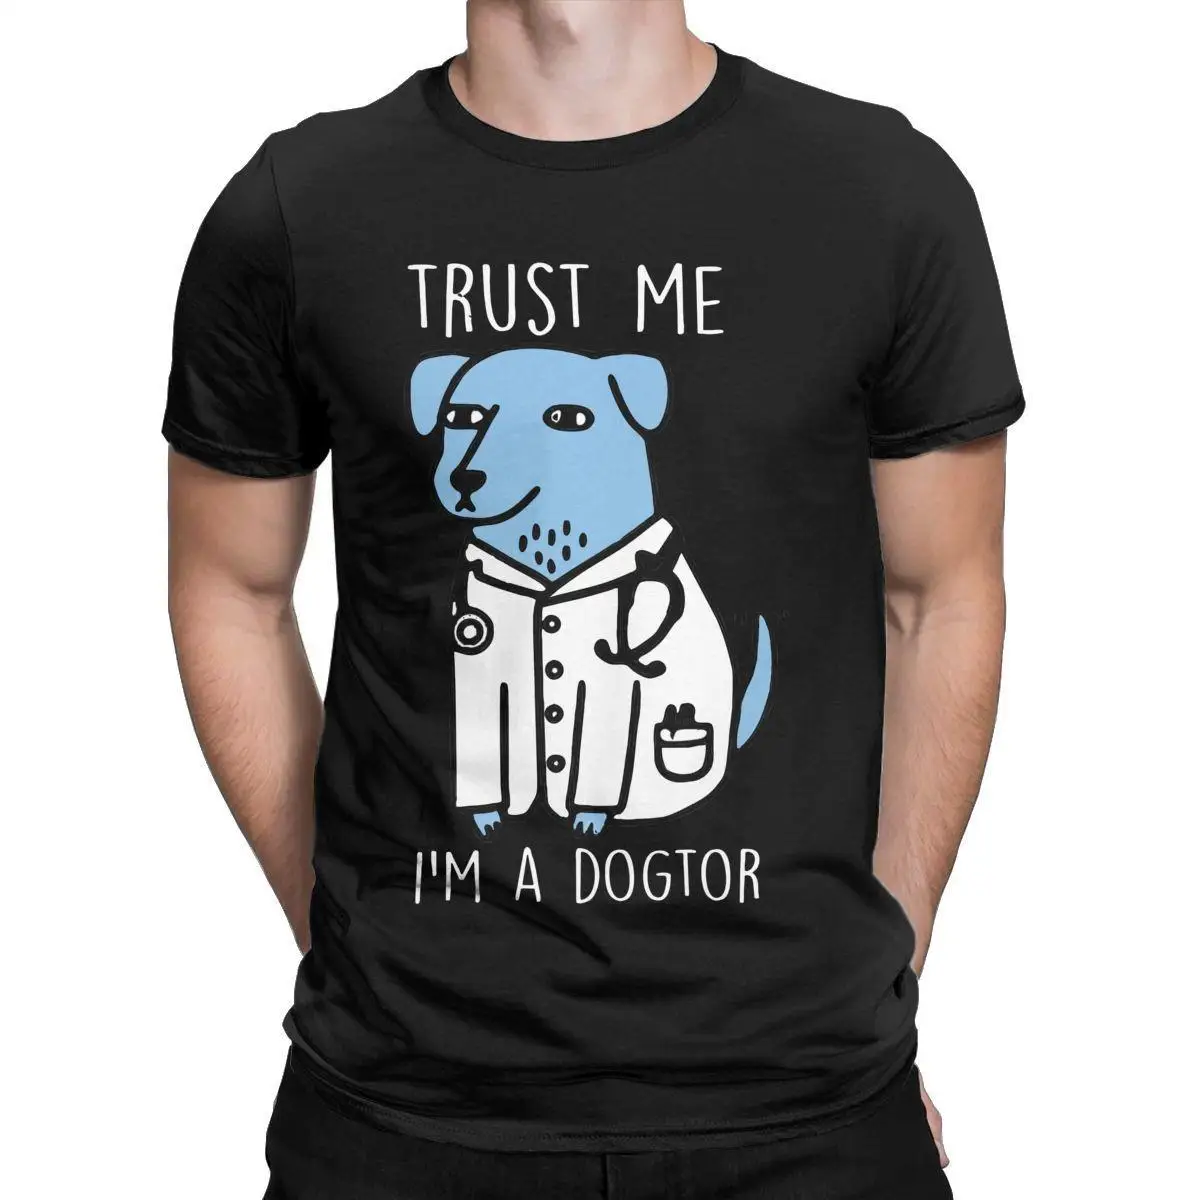 Men T-Shirts Trust Me I'm A Dogtor Unique Cotton Tee Shirt Short Sleeve Cute Dogs T Shirt O Neck Clothes Birthday Present